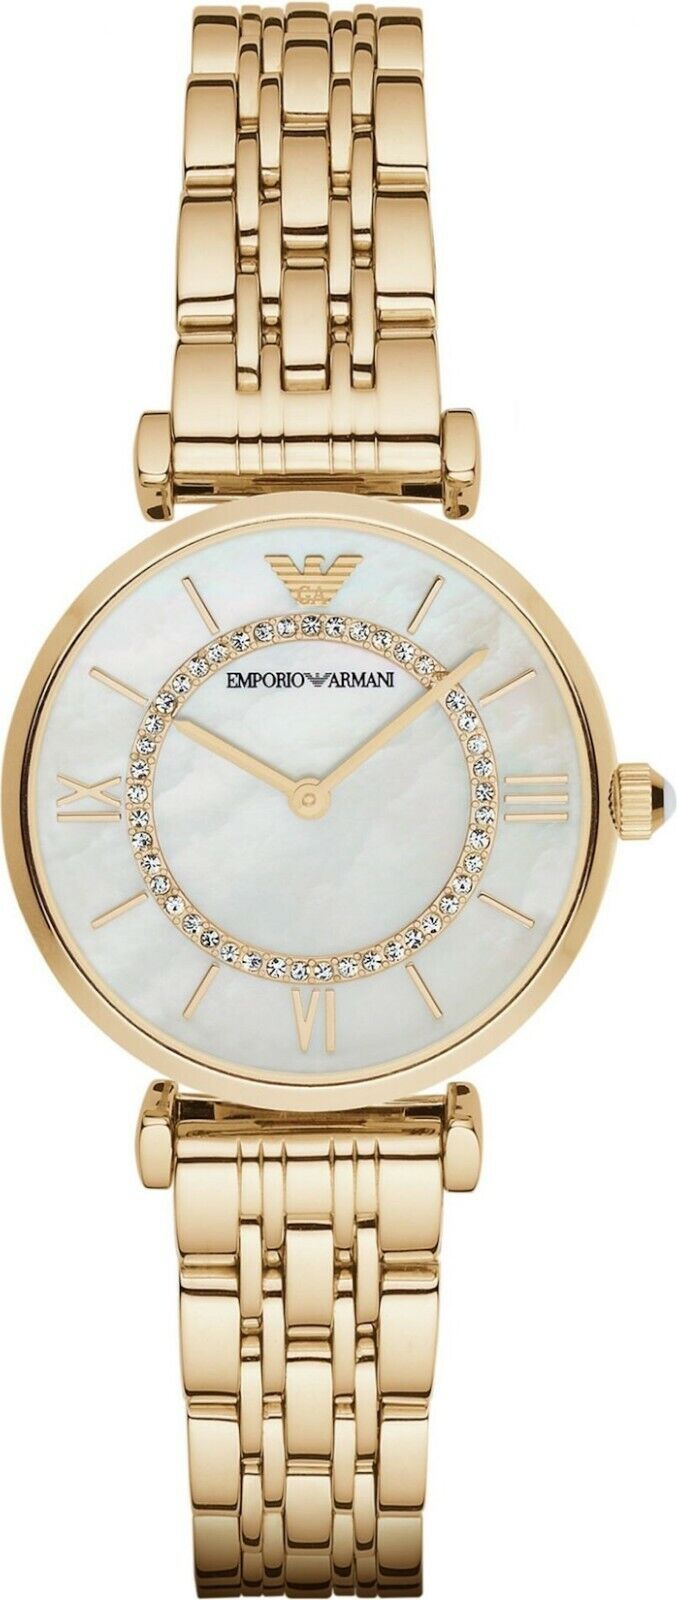 Brand New Gold Emporio Armani Women's Watch AR1907 - 100% Authentic